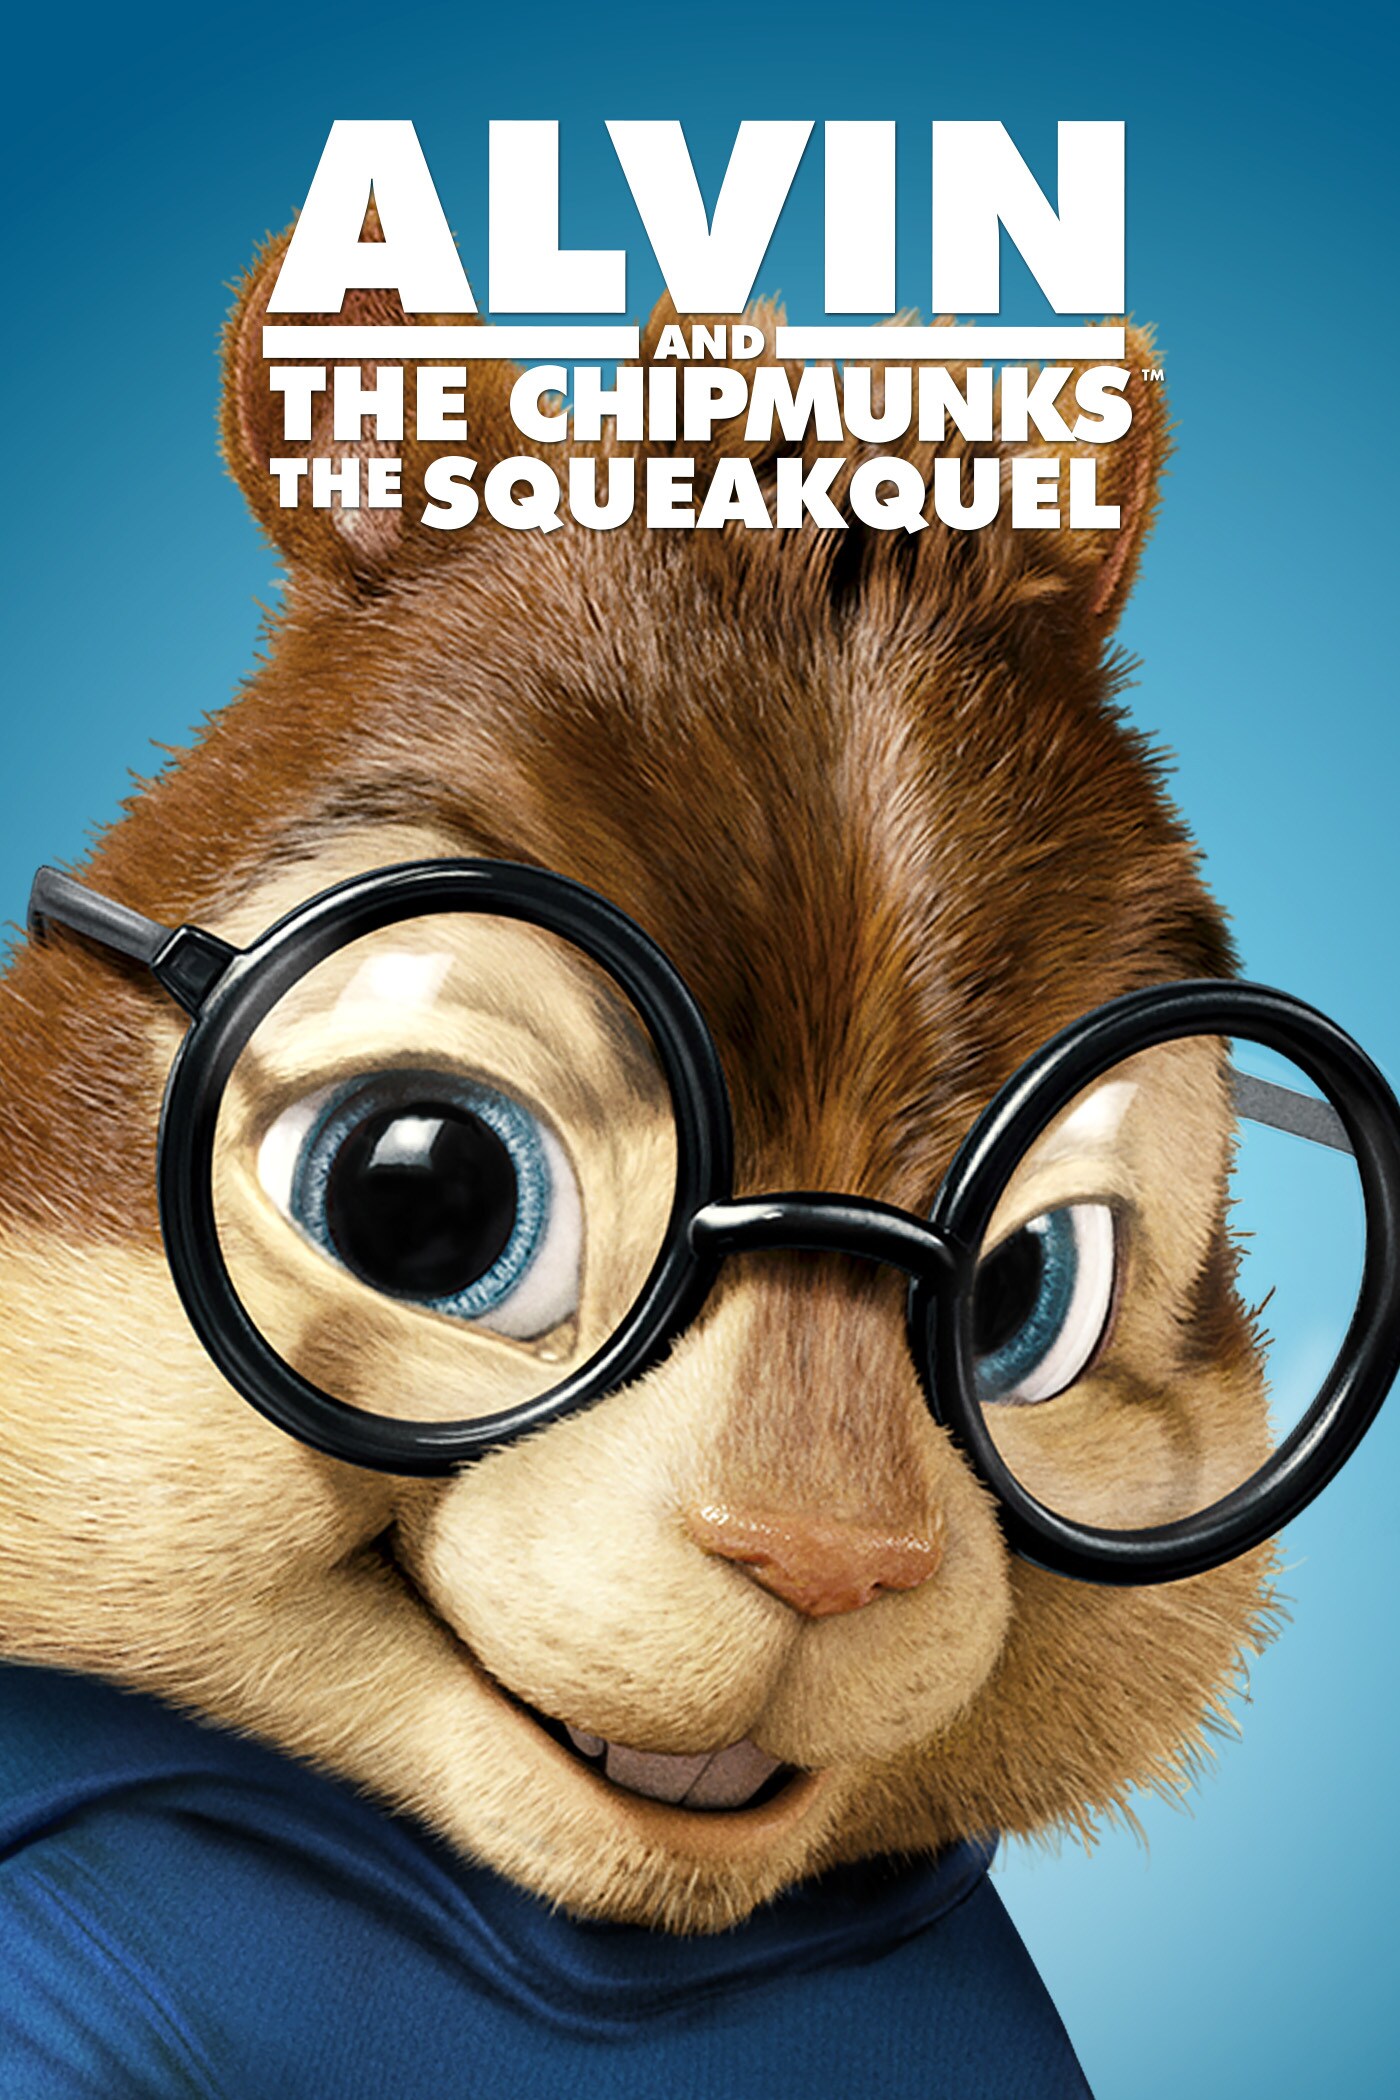 dawn jones campbell recommends Alvin Chipmunks Full Movie